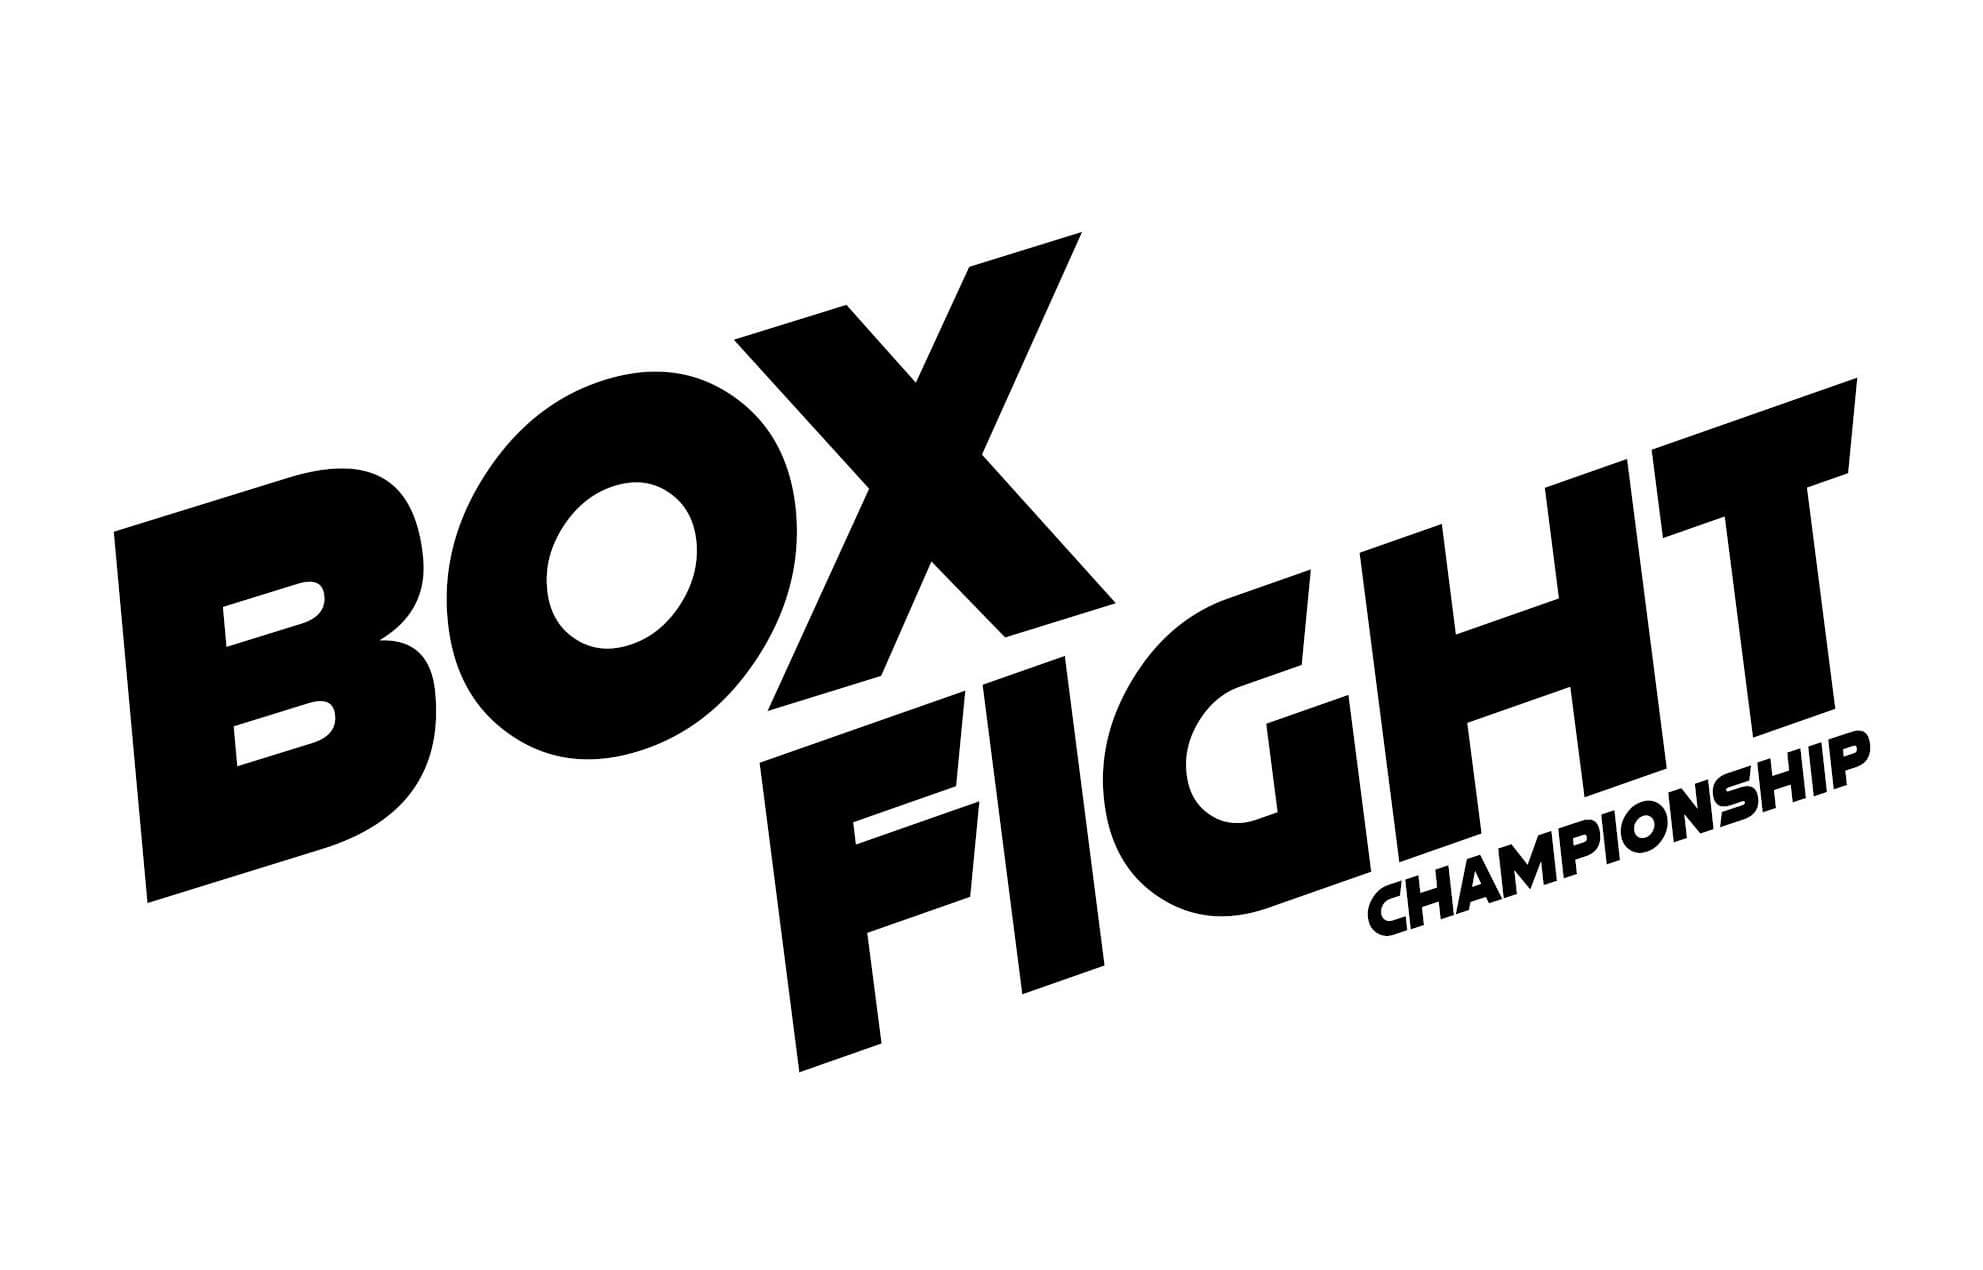 Apa Fortnite Box Fighting Championship akan datang 1